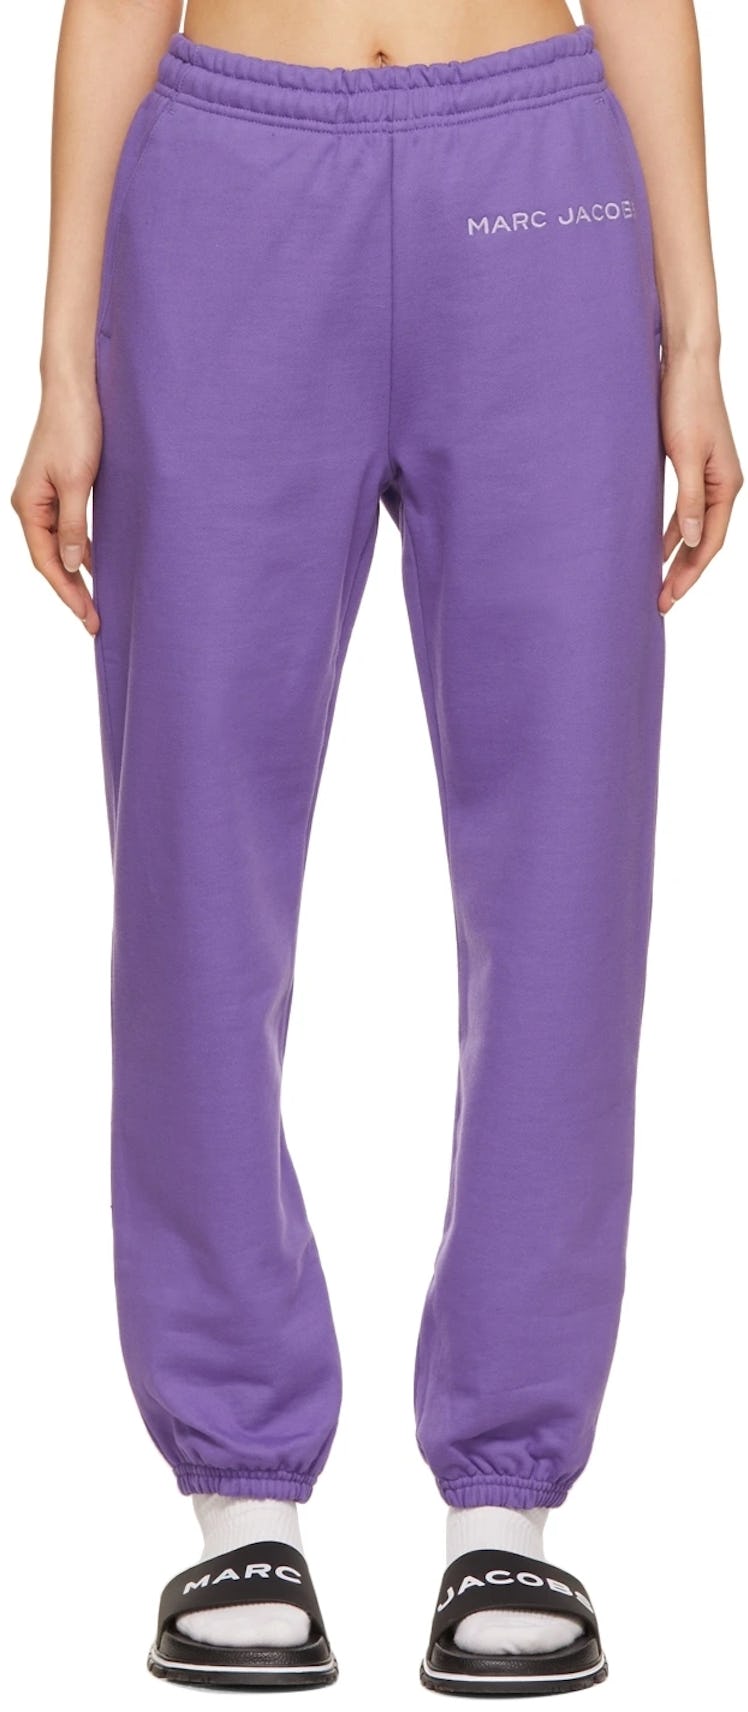 Marc Jacobs' Purple 'The Sweatpants' Lounge Pants.